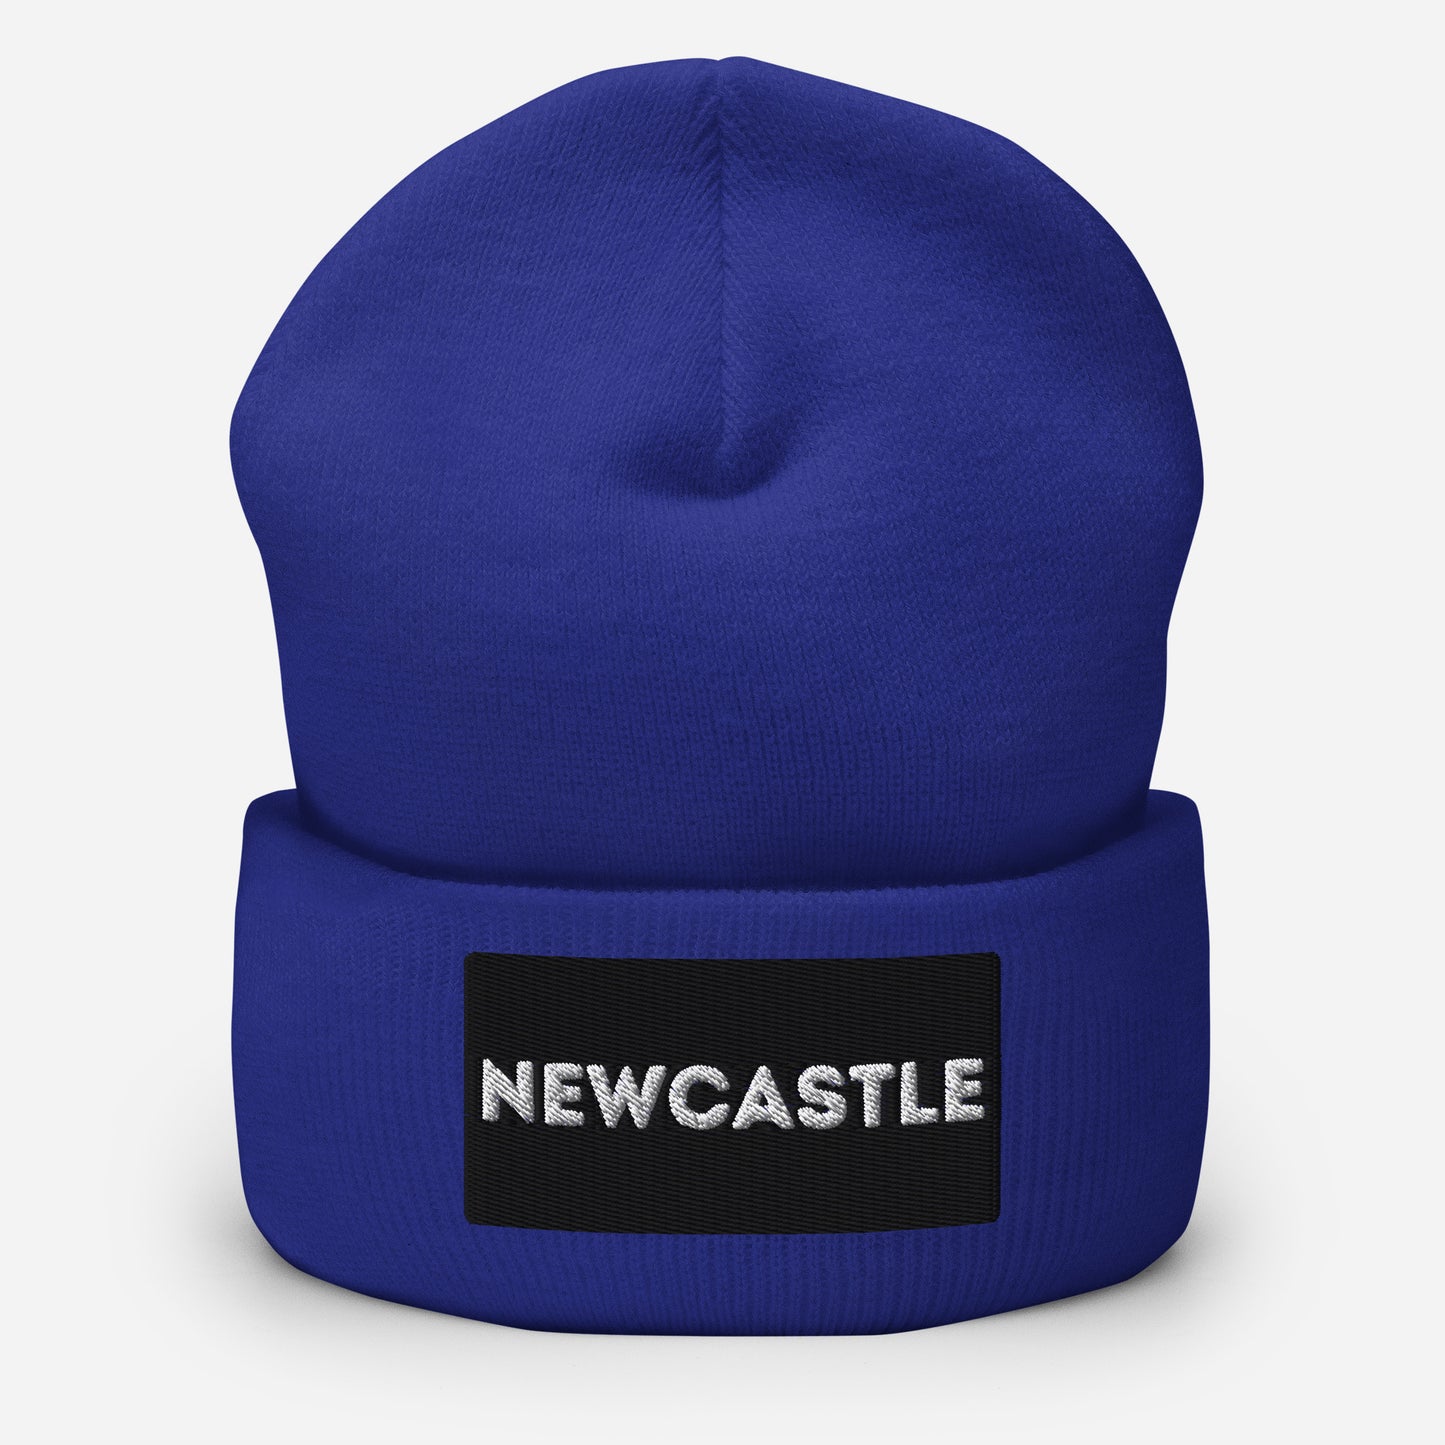 Newcastle Cuffed Beanie Hat